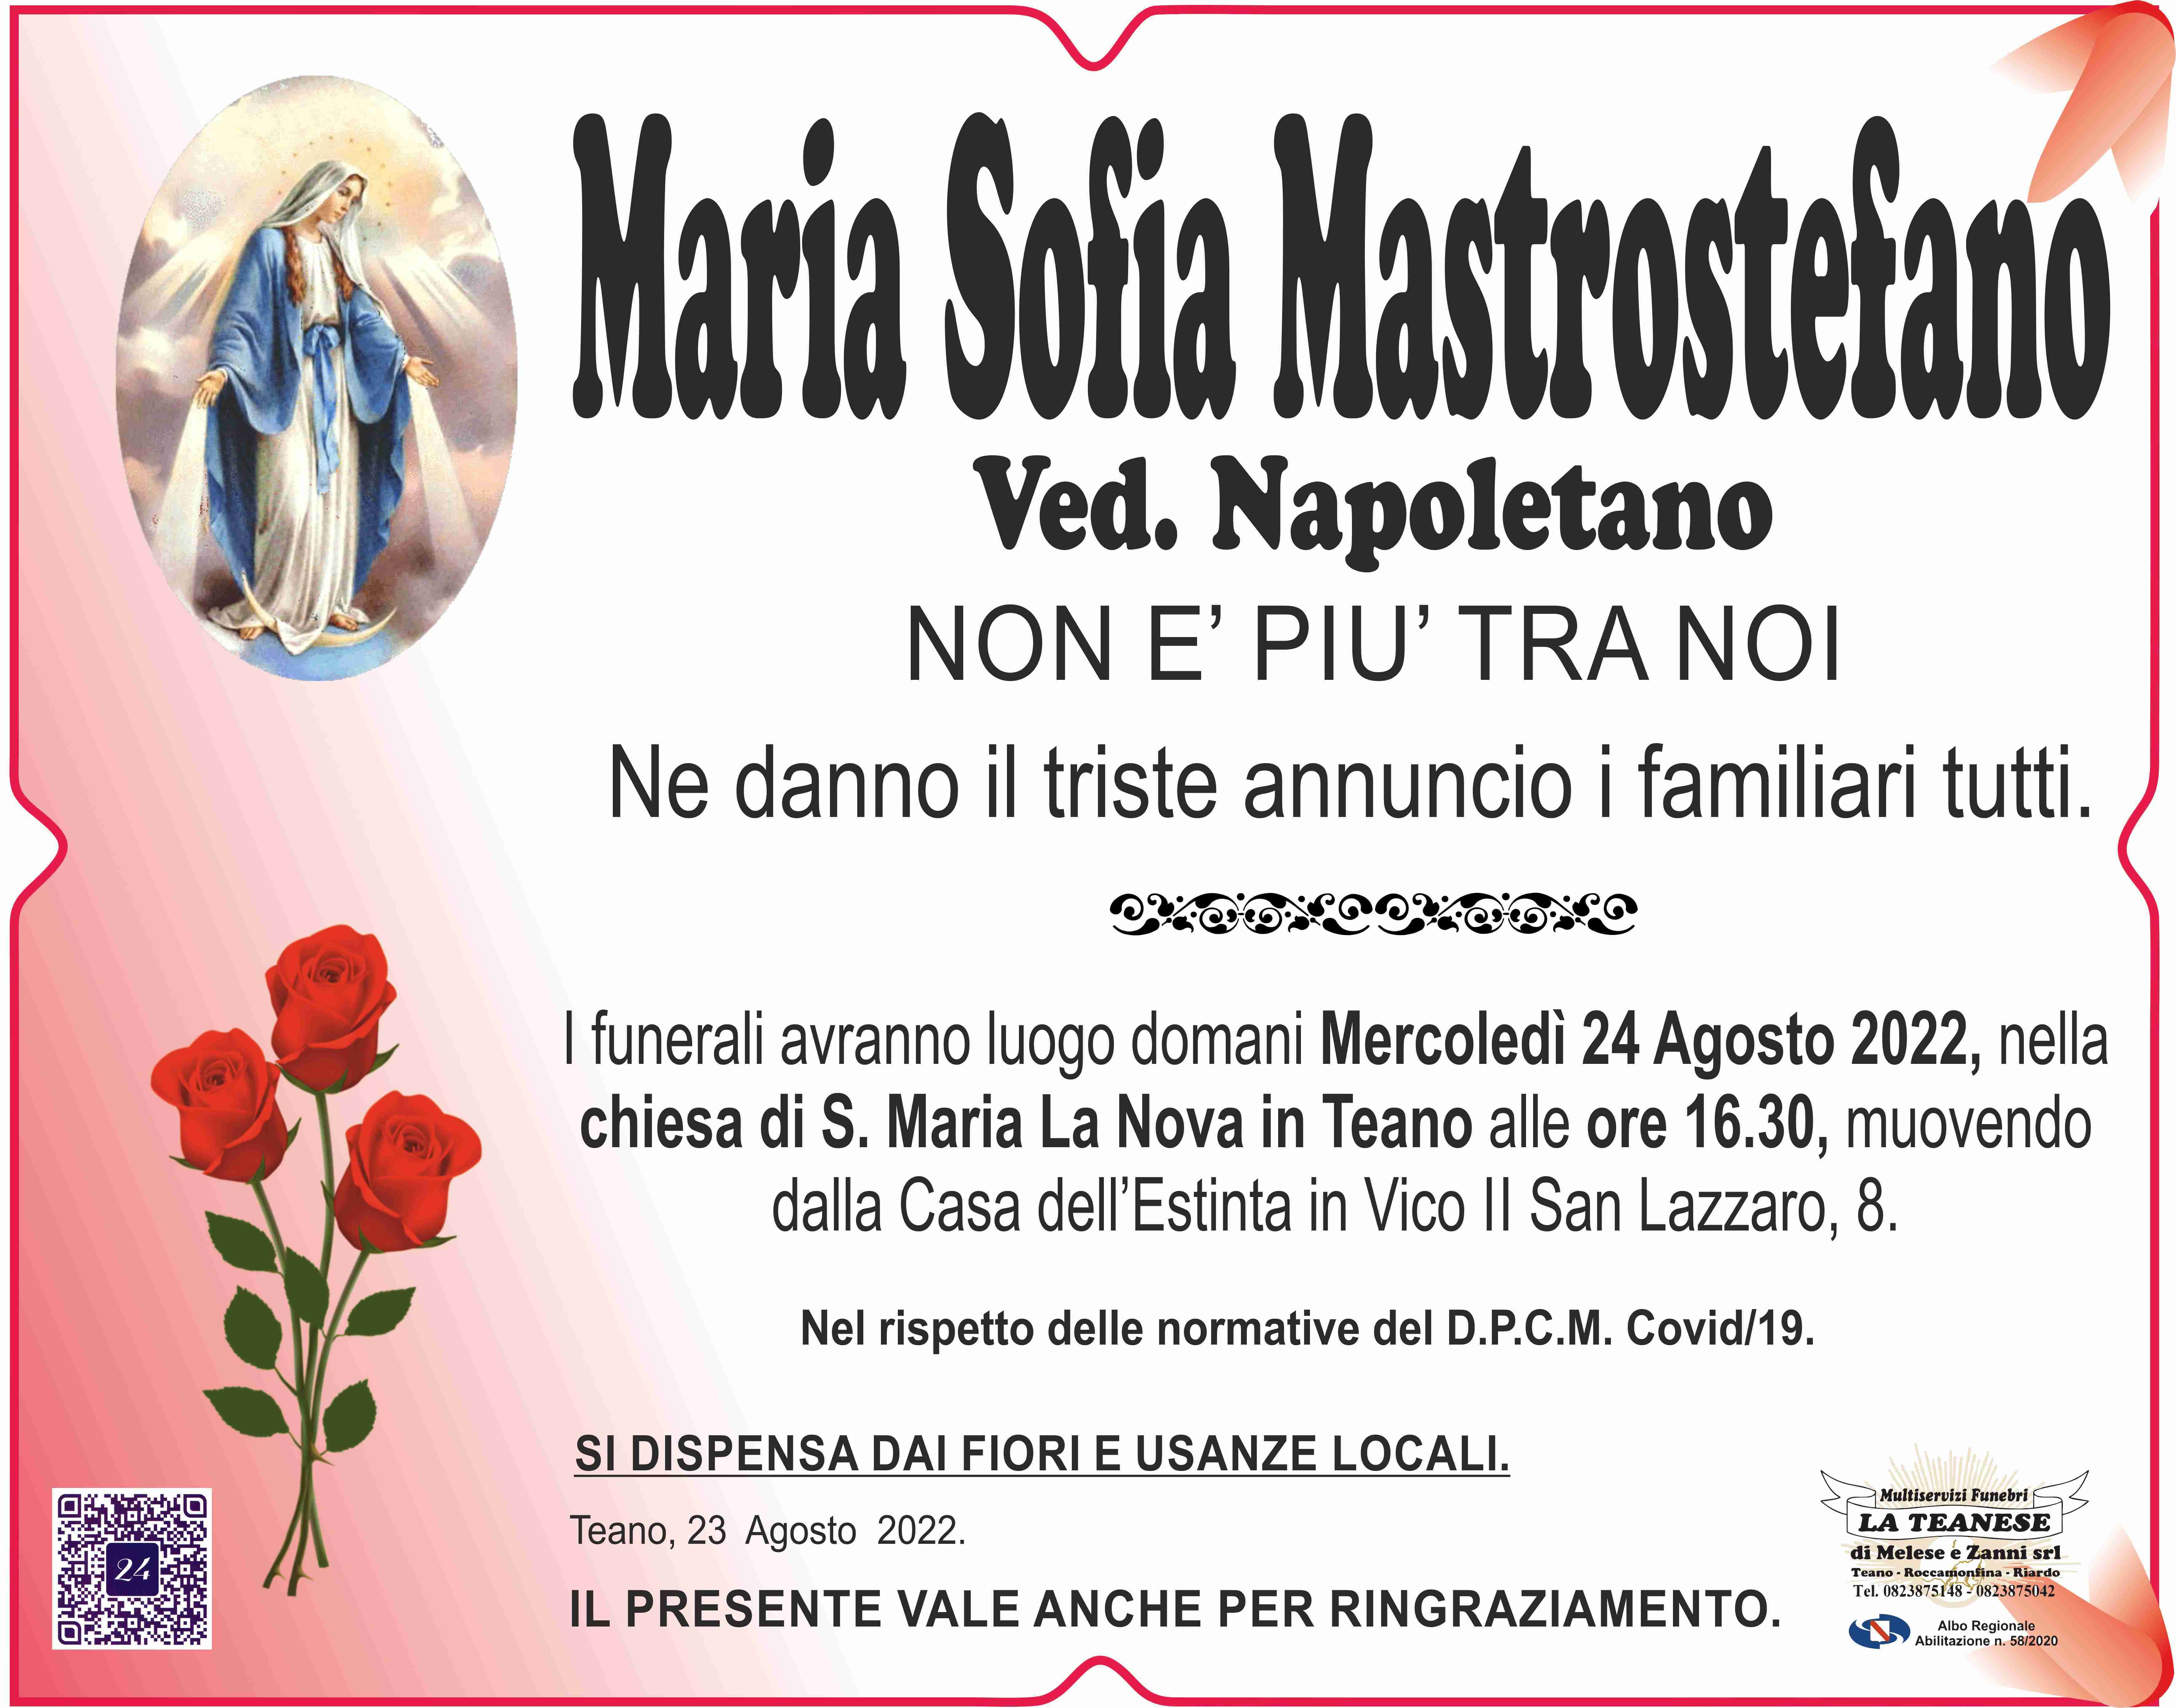 Maria Sofia Mastrostefano